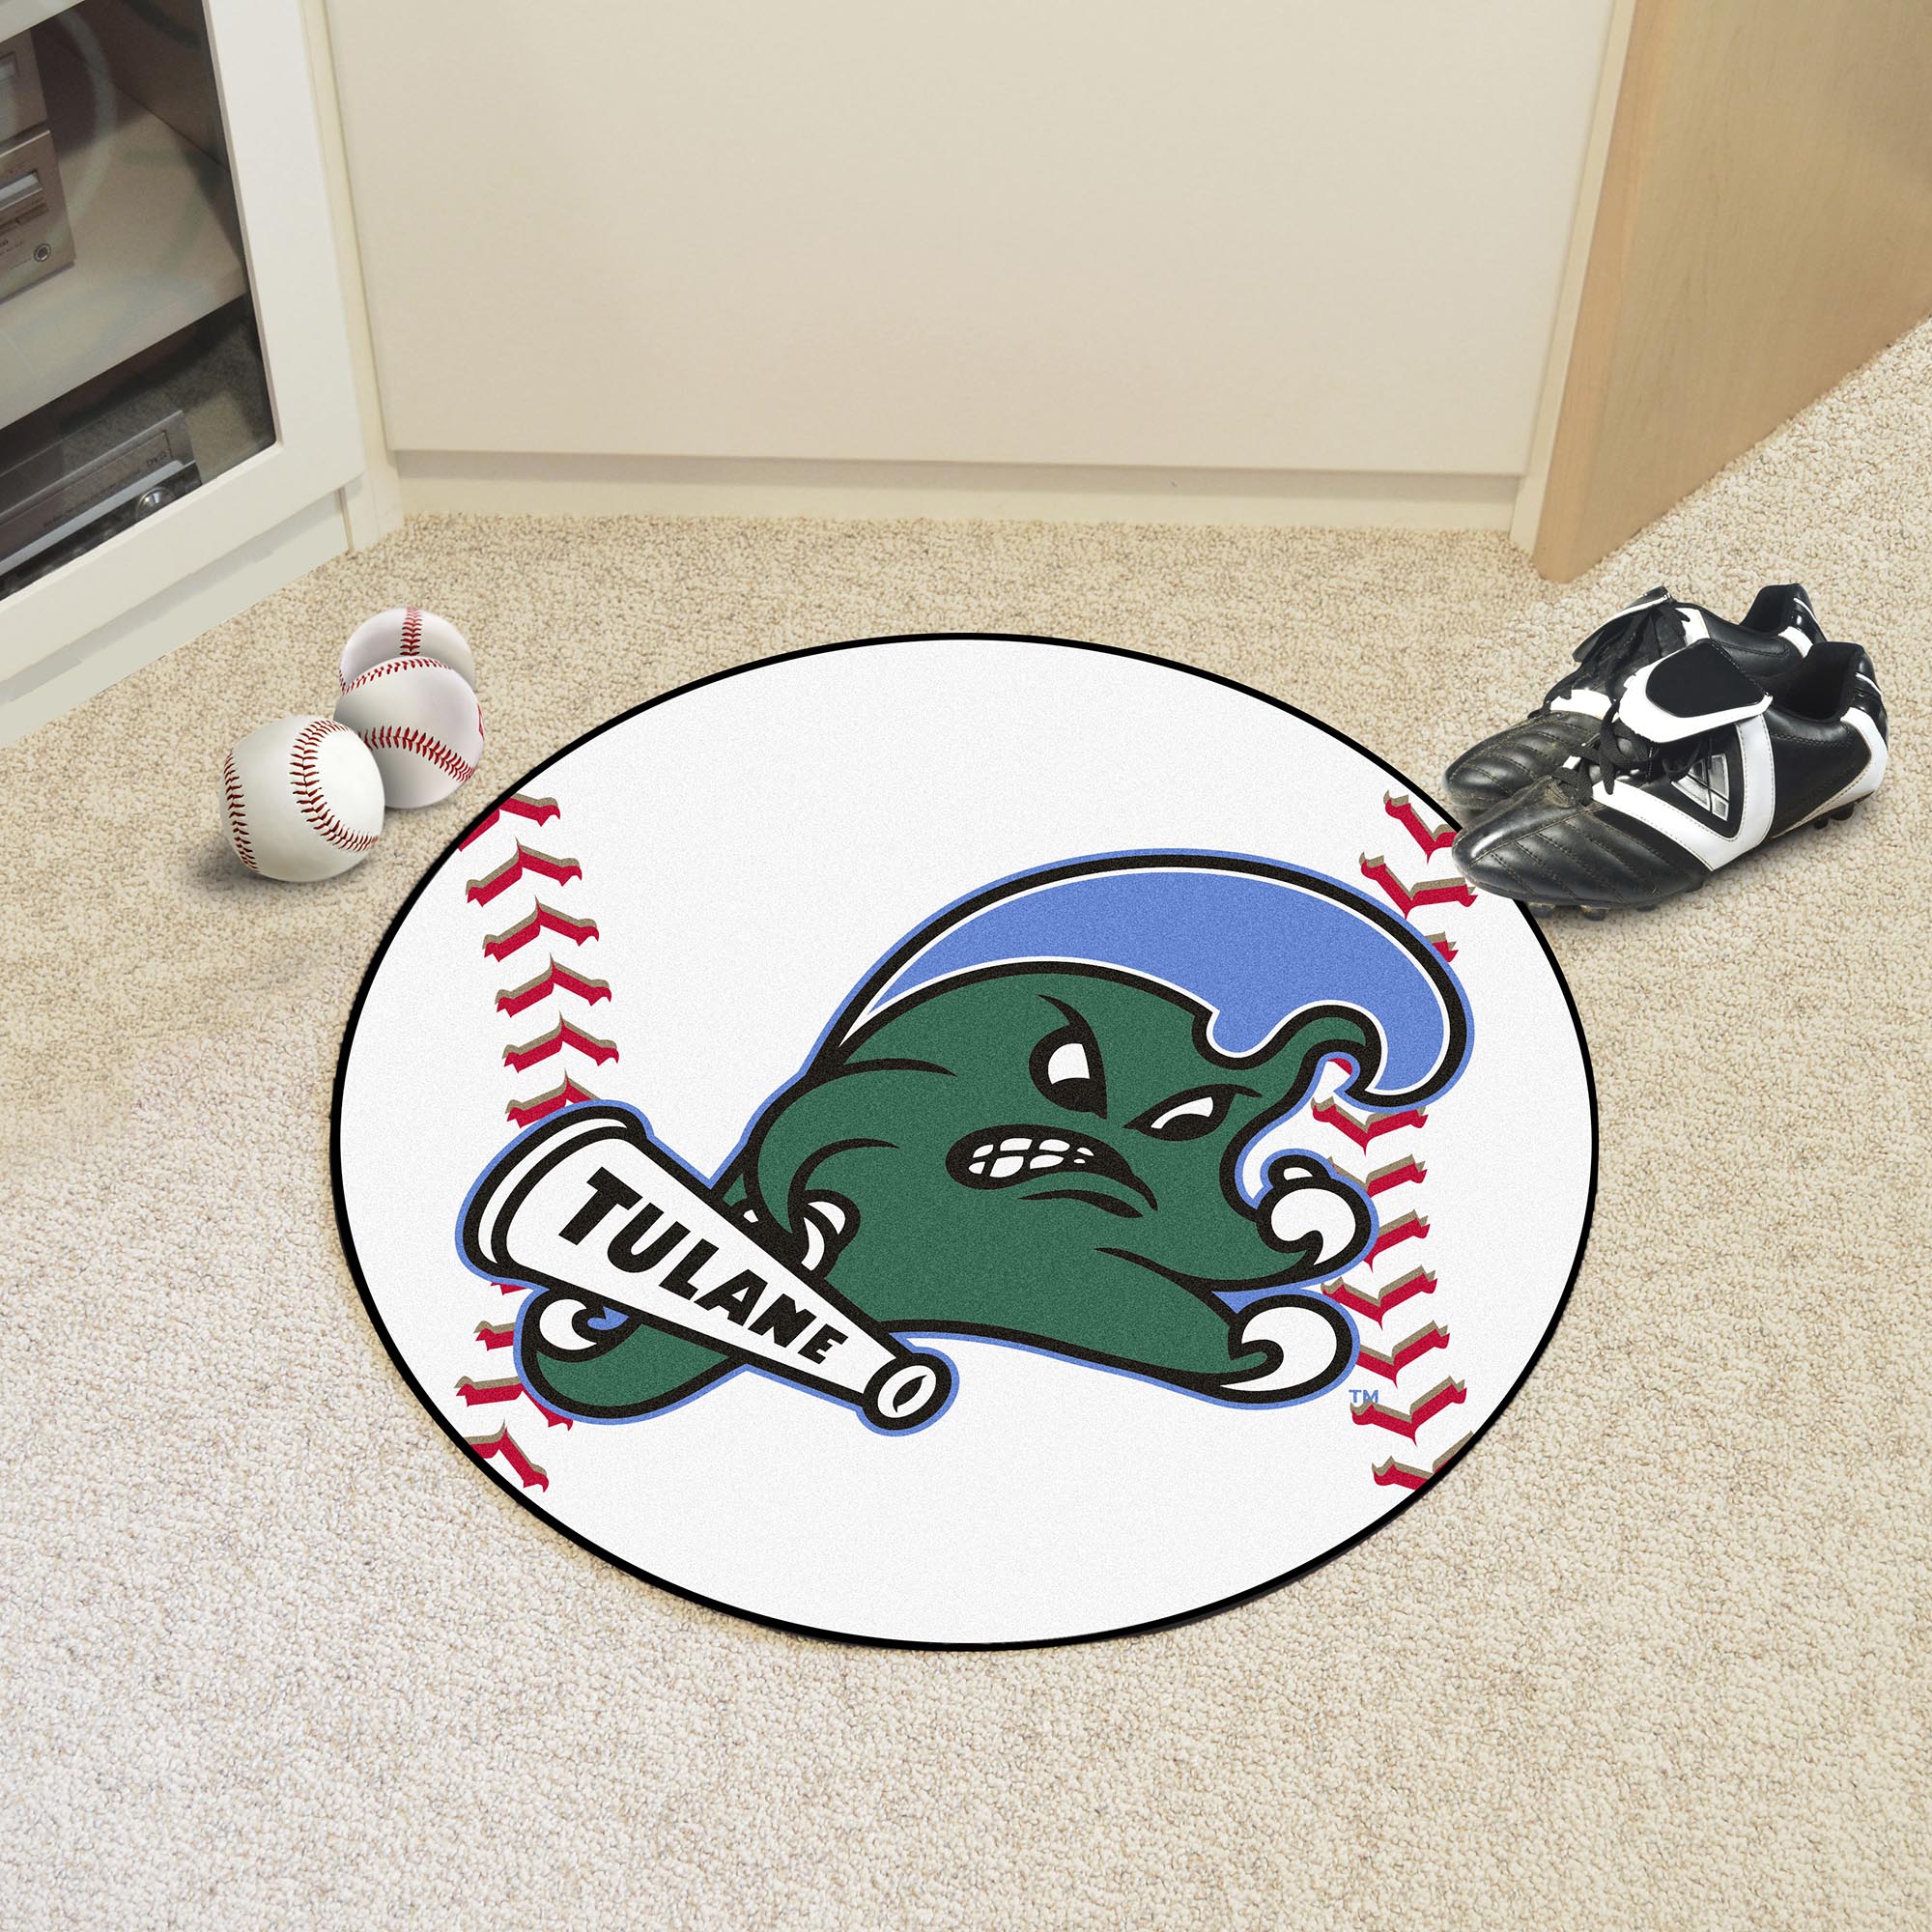 Tulane Baseball Mat 27" diameter - image 2 of 2